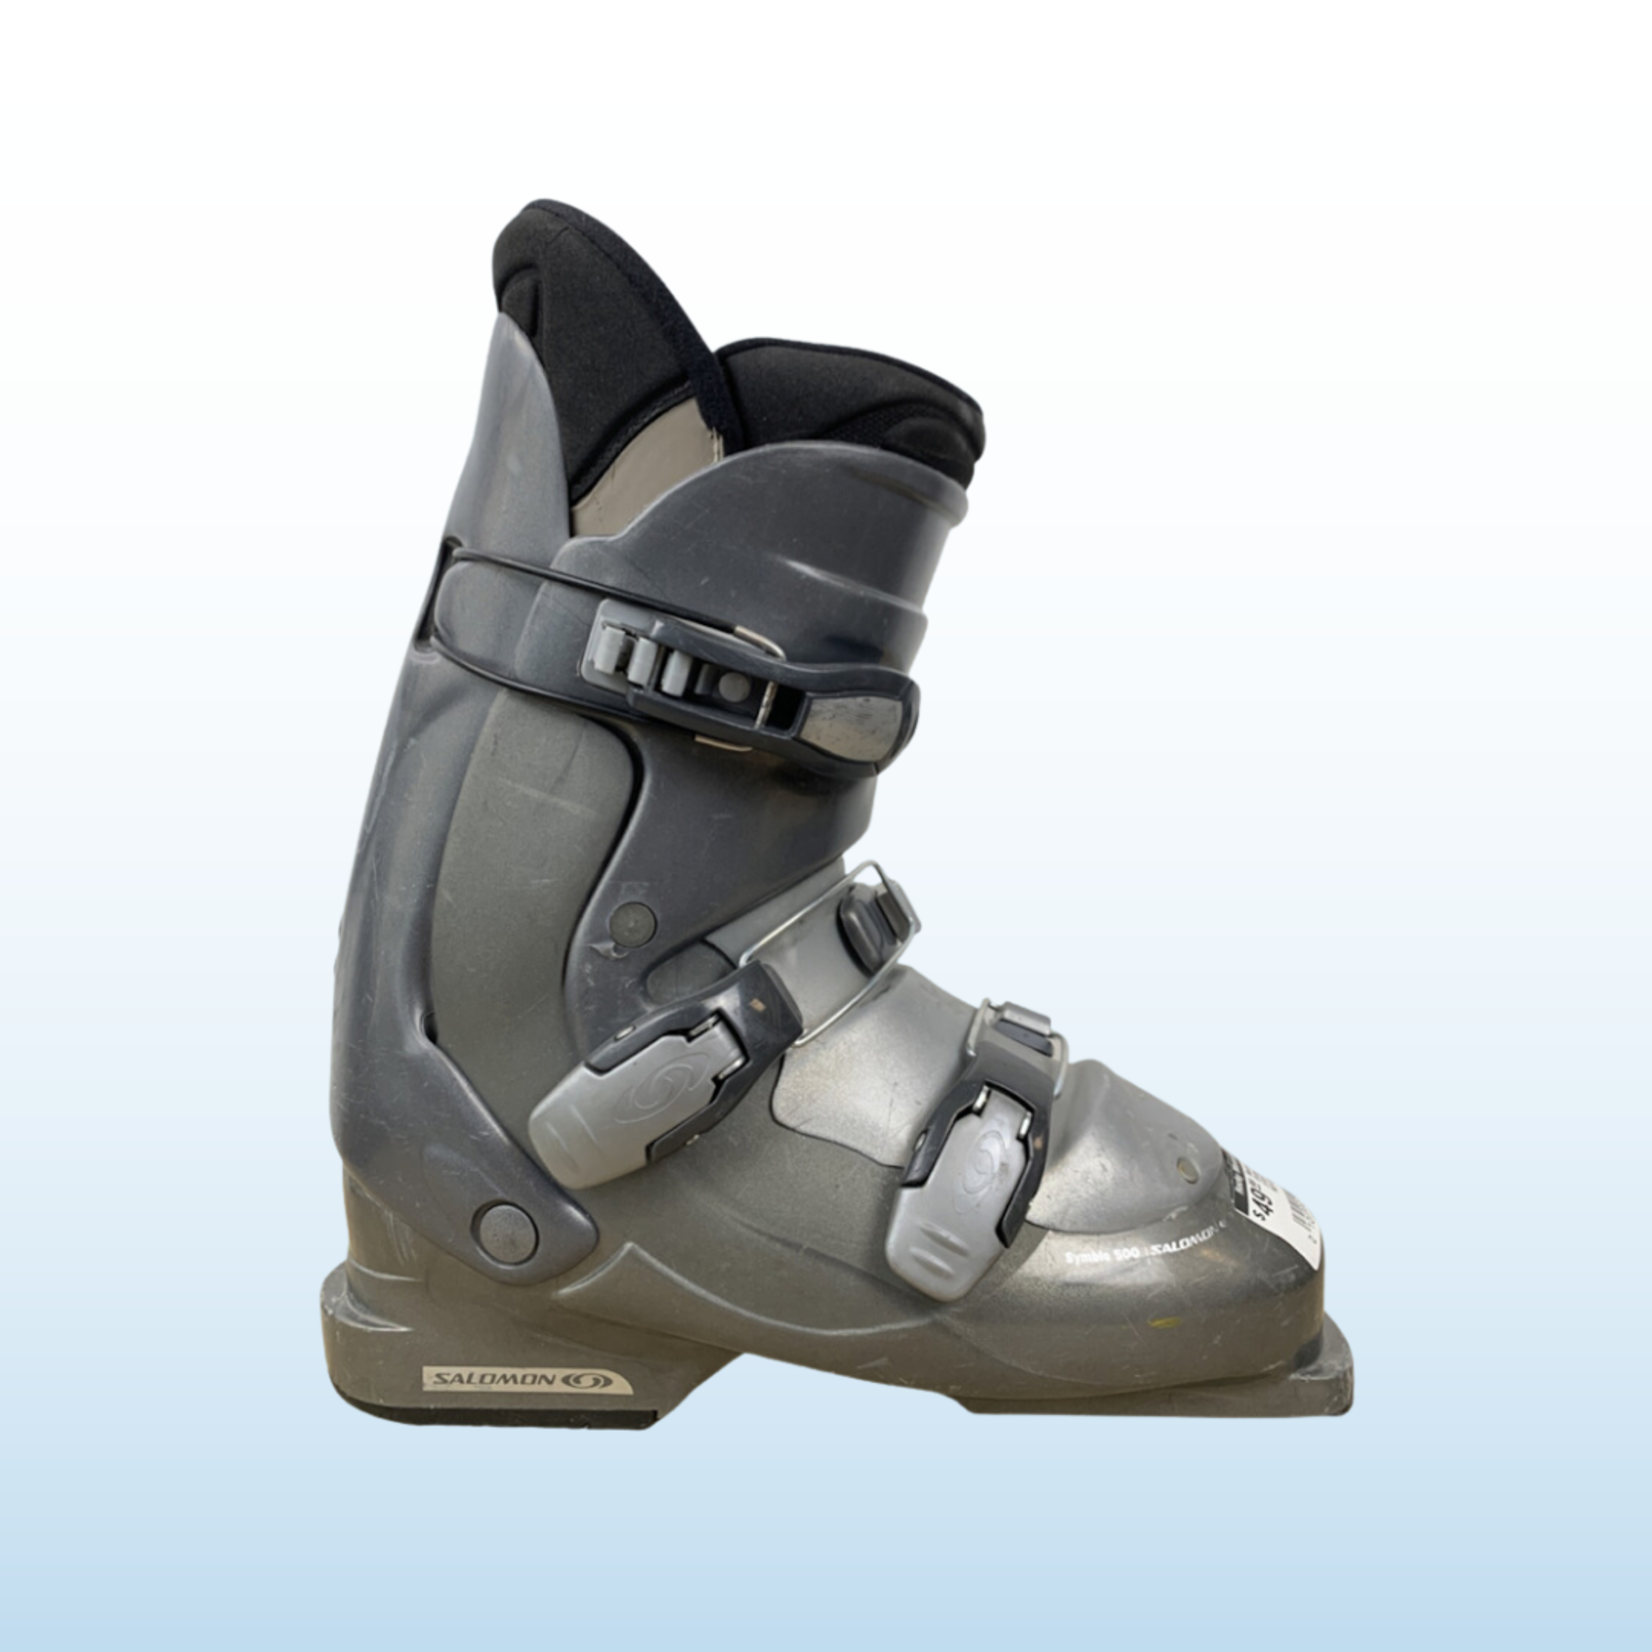 Salomon Salomon Symbio Rear Entry Ski Boots, Size 23/23.5  SOLD AS IS/NO REFUNDS/EXCHANGES